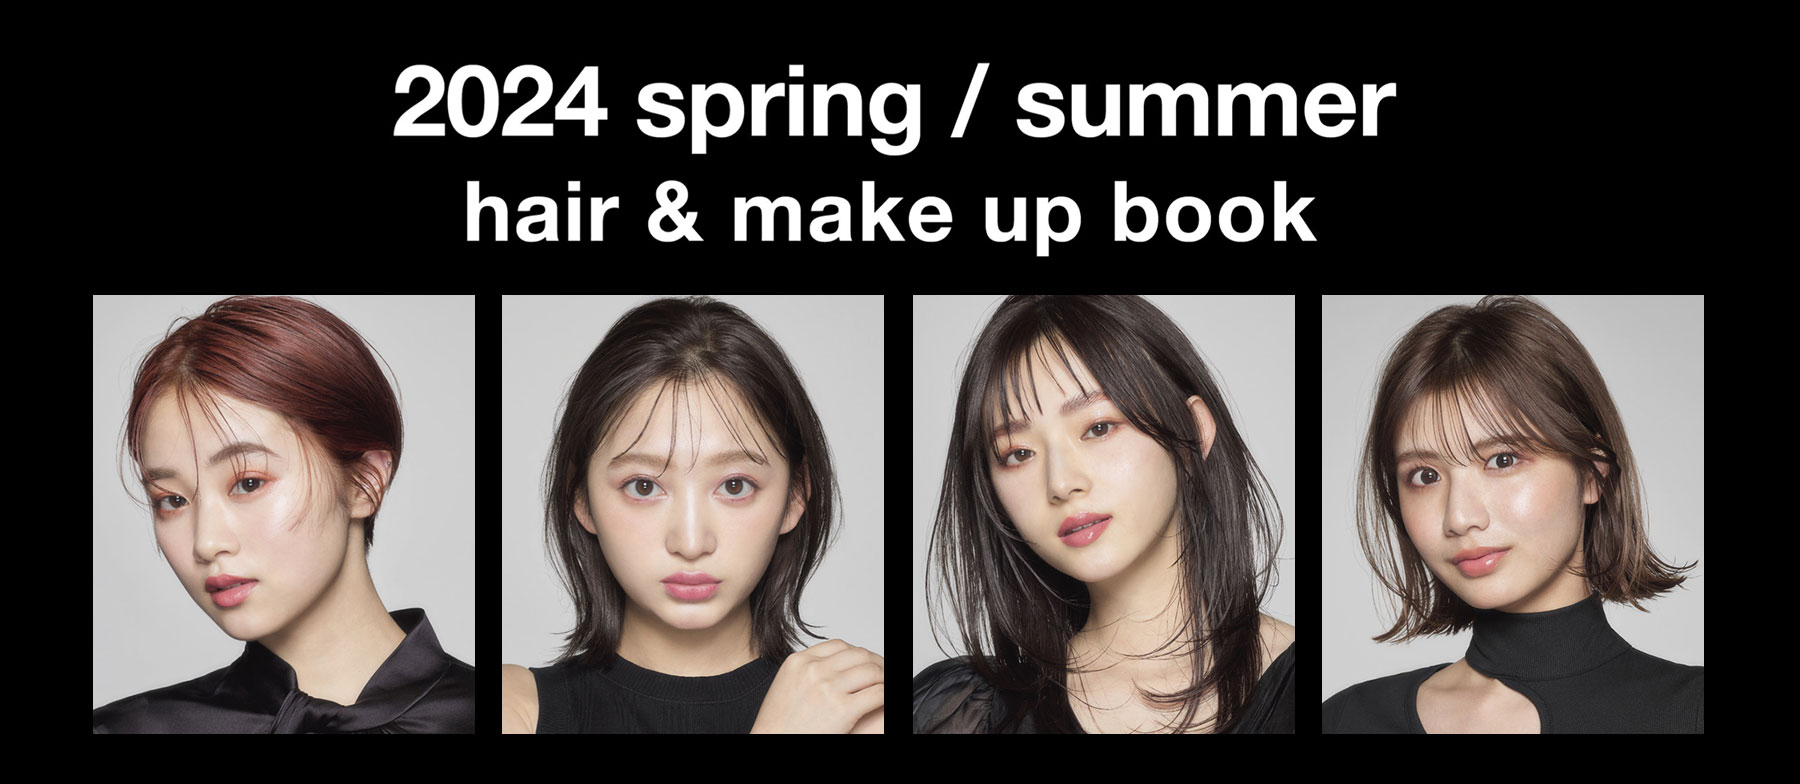 2024 spring/summer hair & make up book